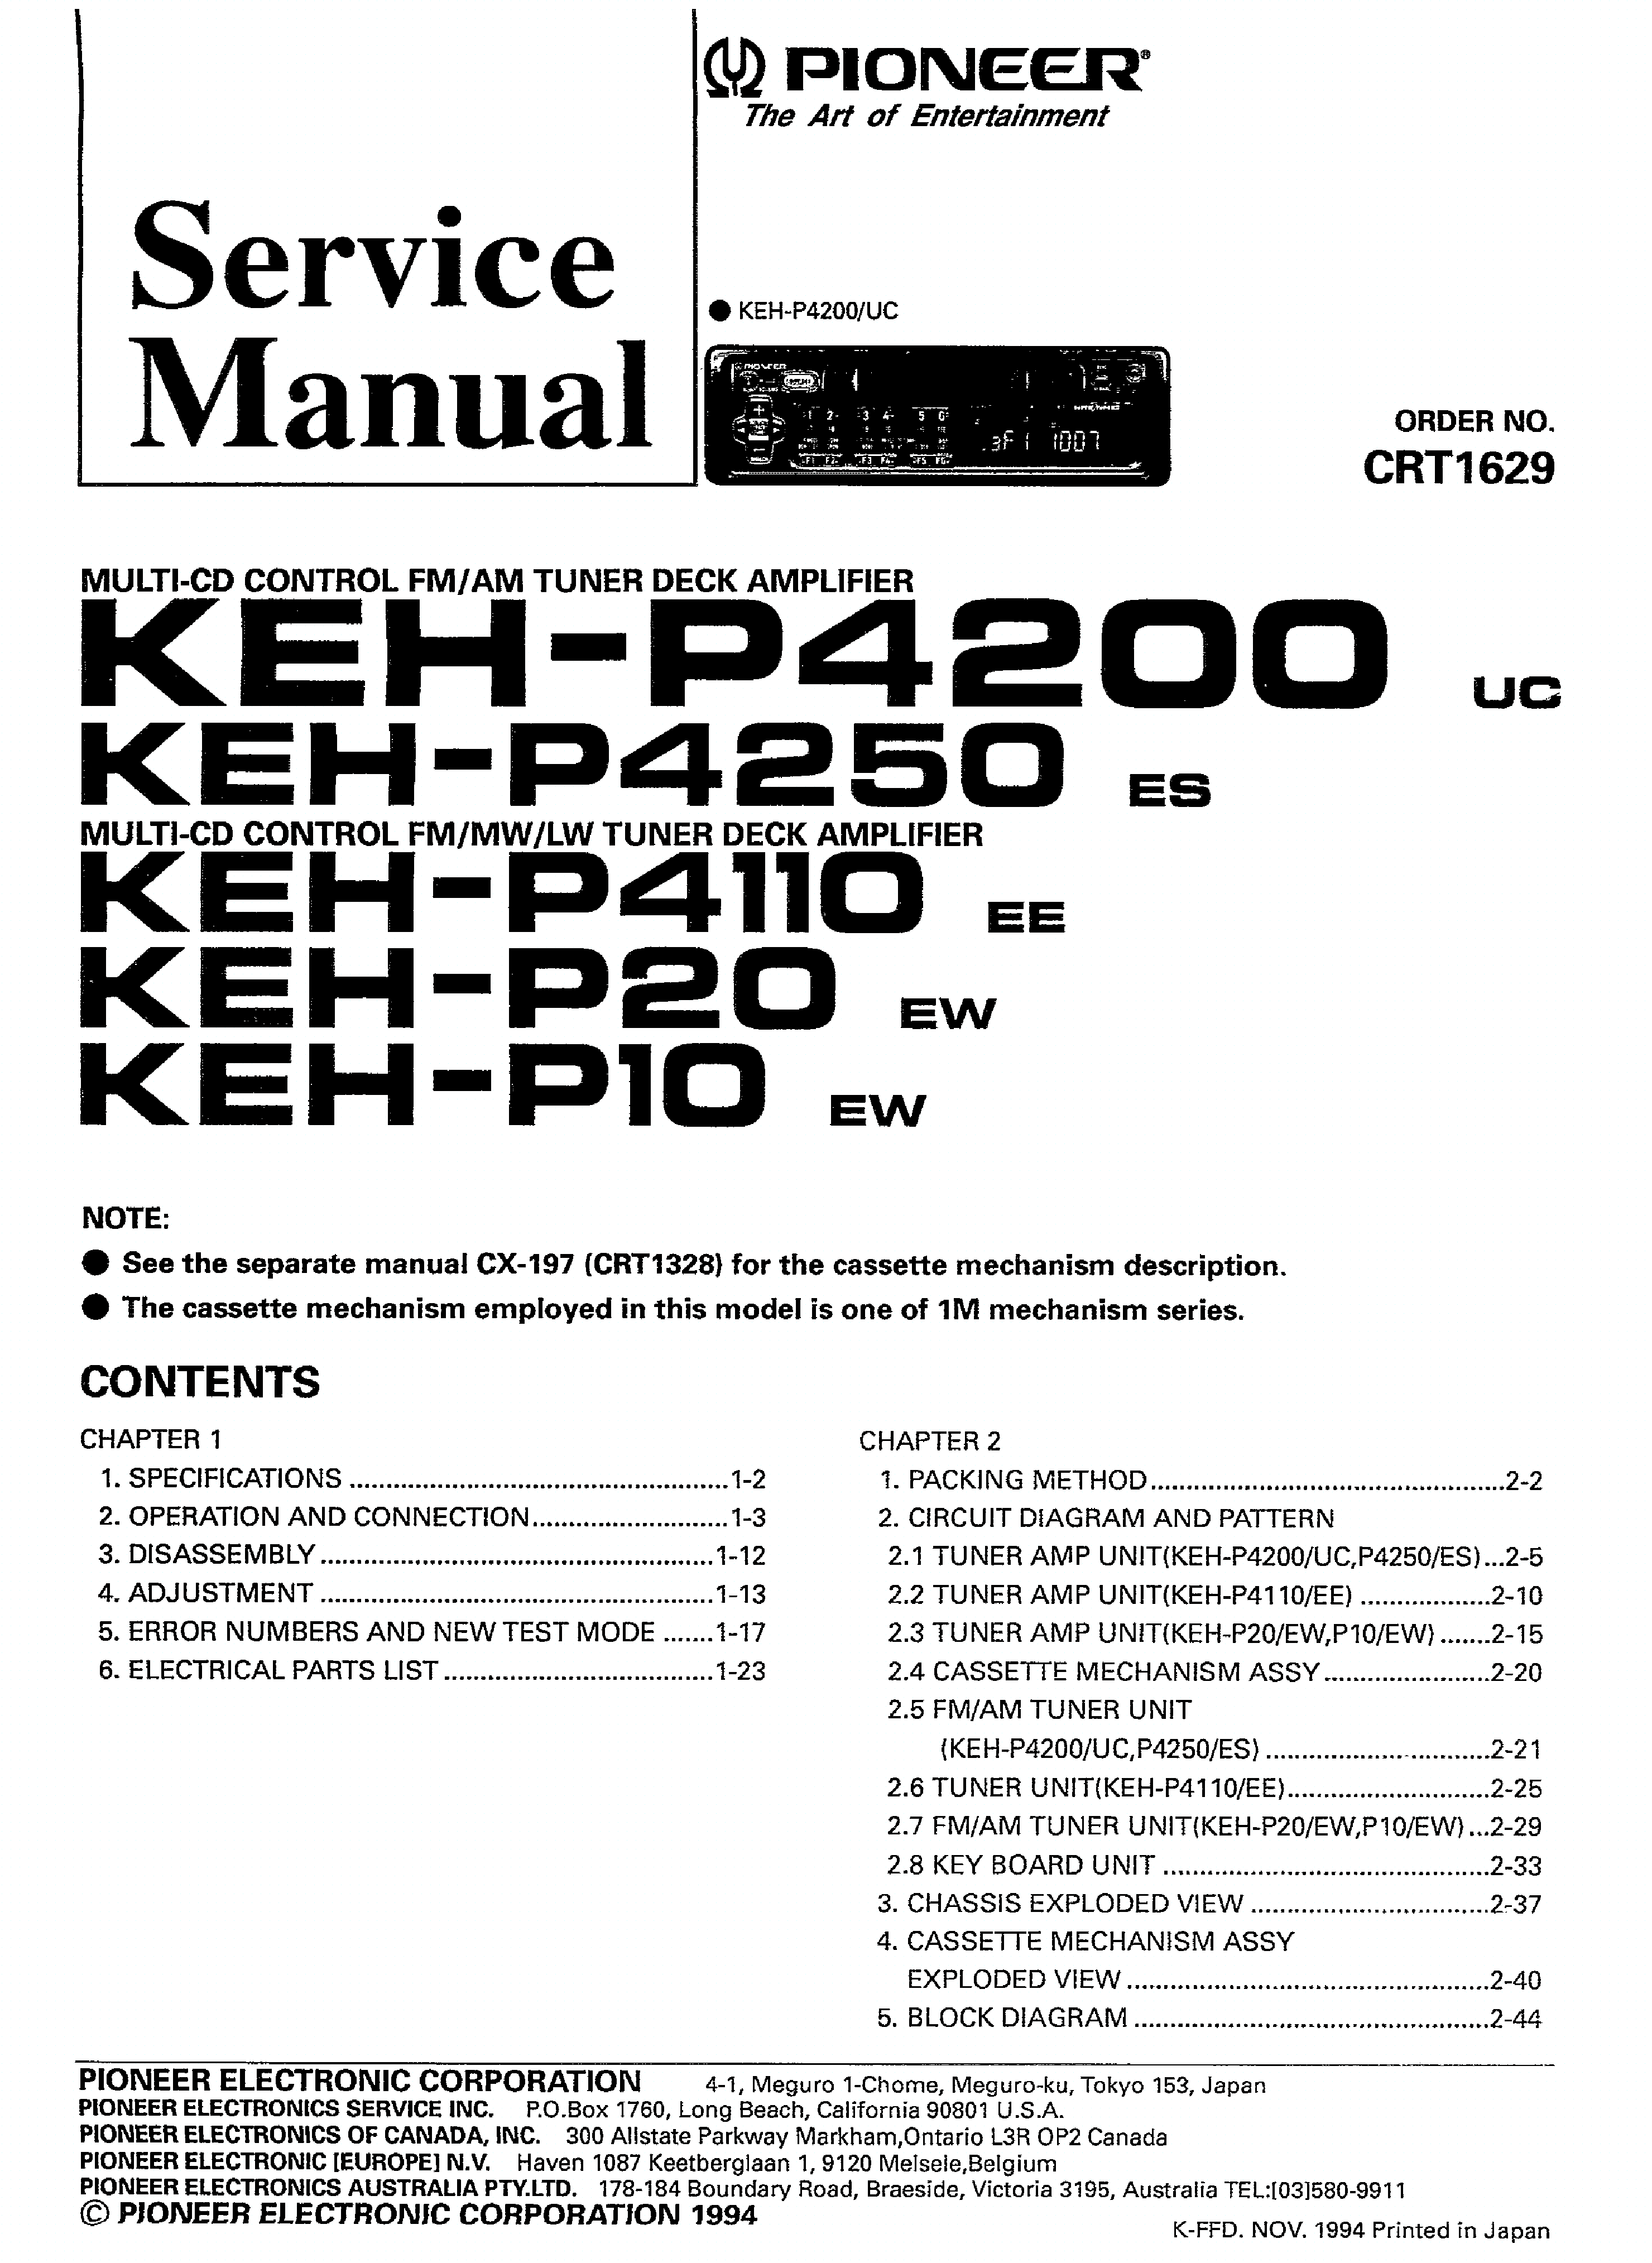 PIONEER KEH-P4200 service manual (1st page)